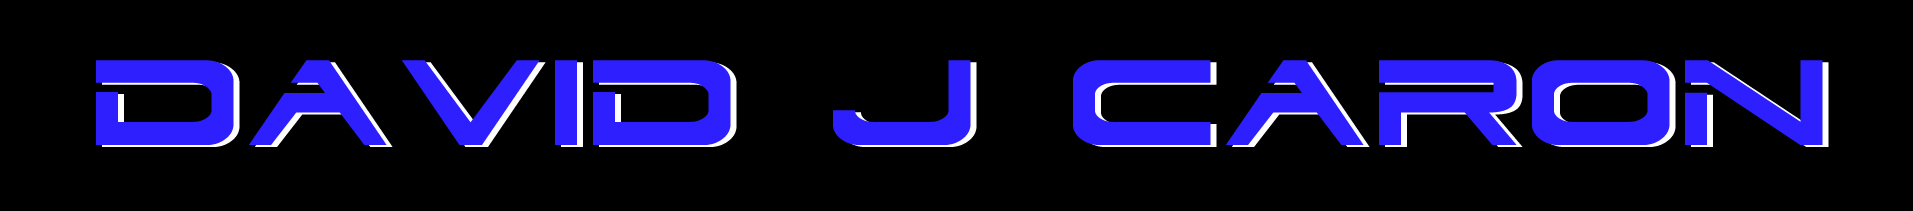 David J Caron logo